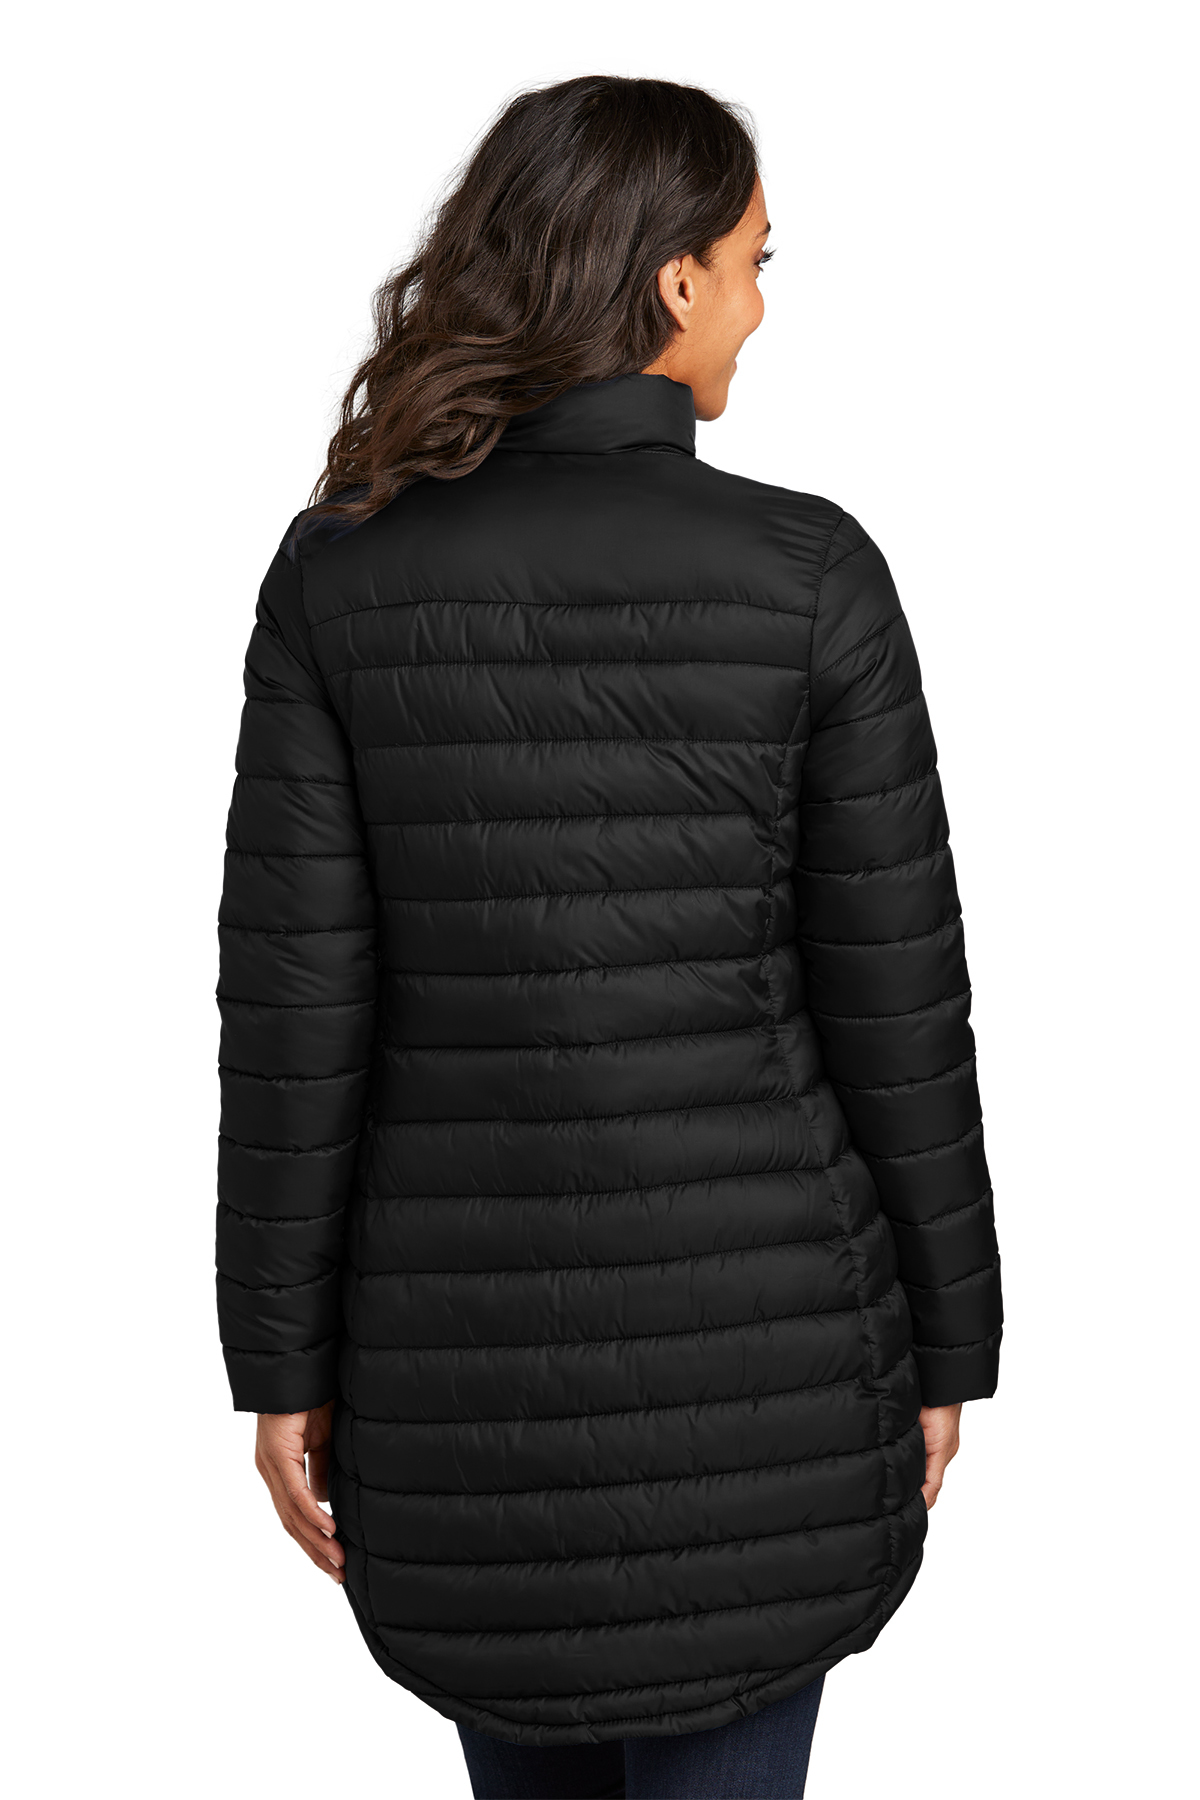 Port Authority Ladies Horizon Puffy Long Jacket | Product | SanMar